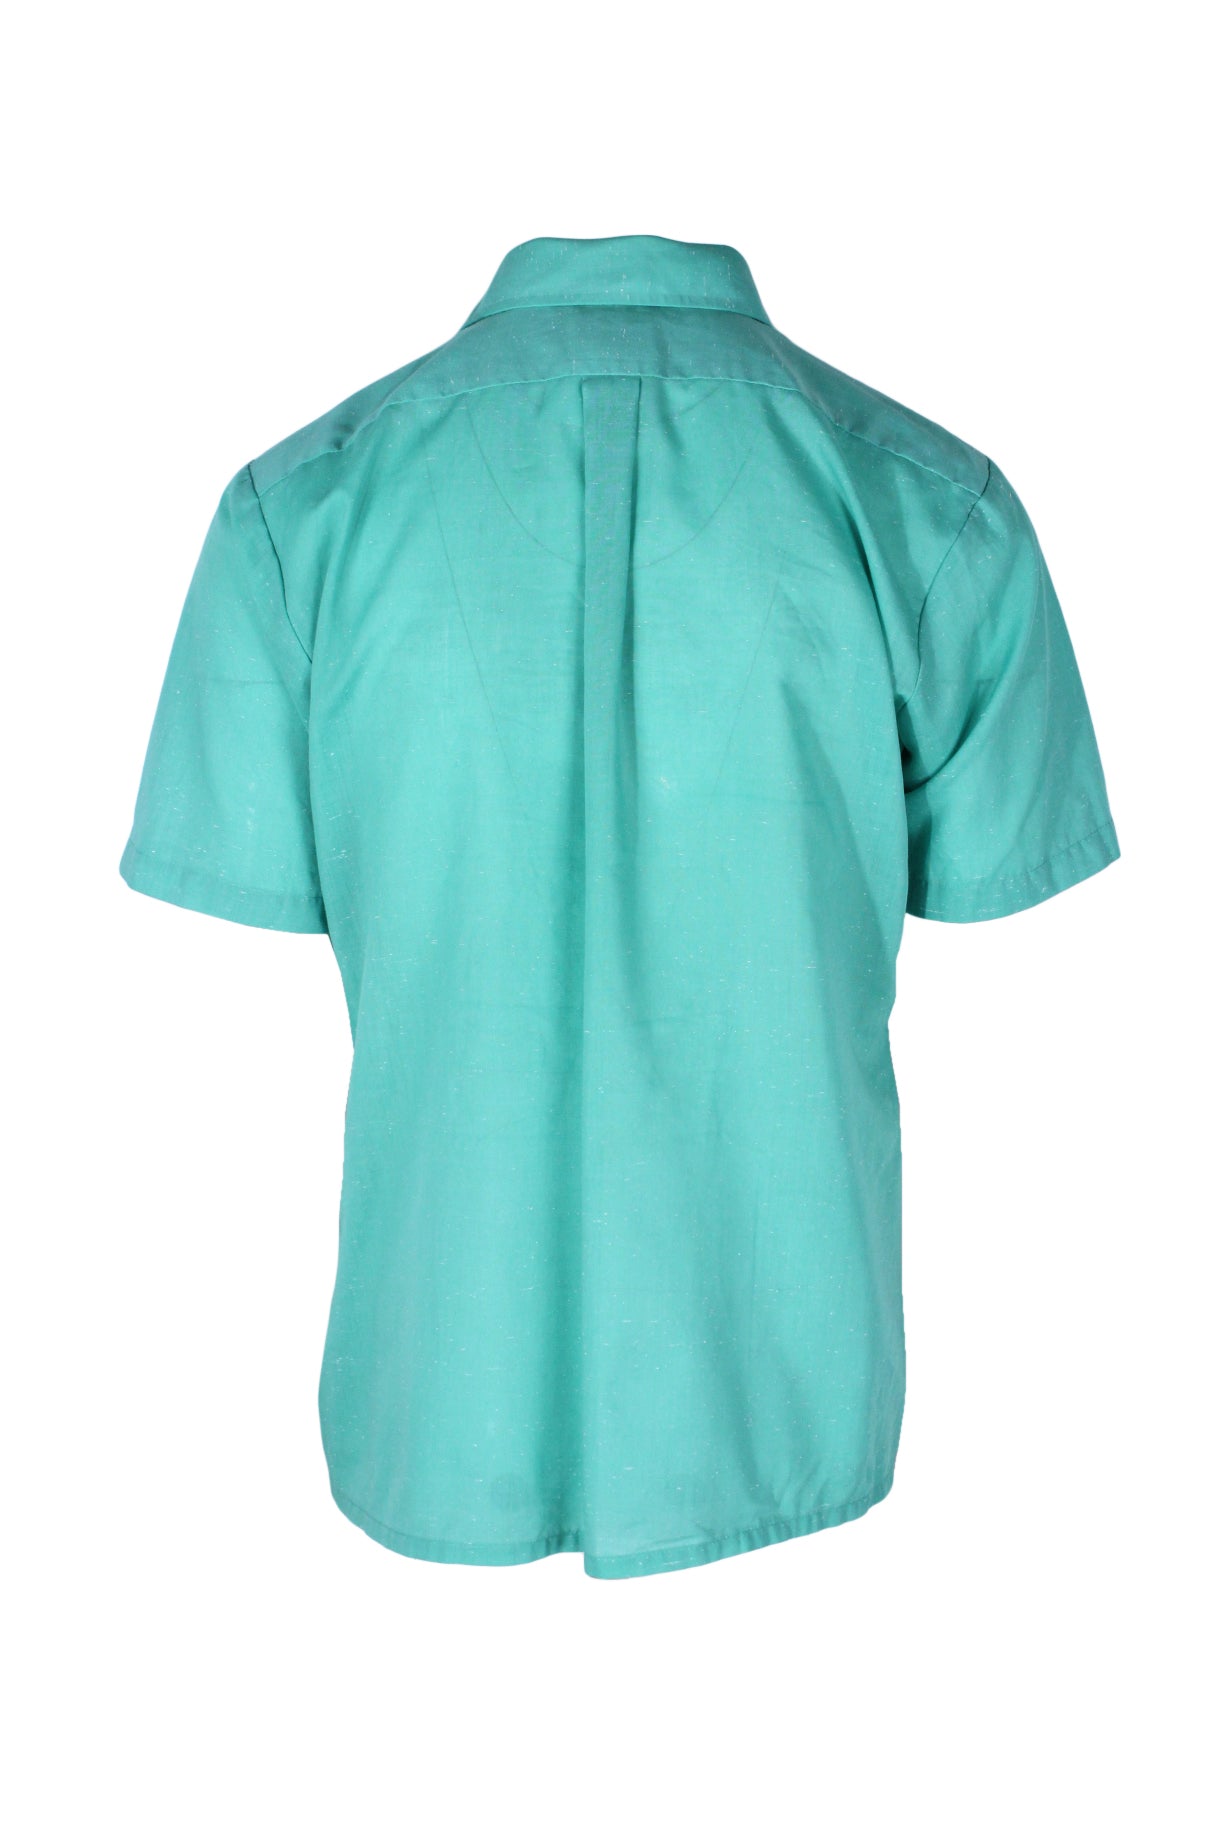 back angle of short sleeve collared shirt. 